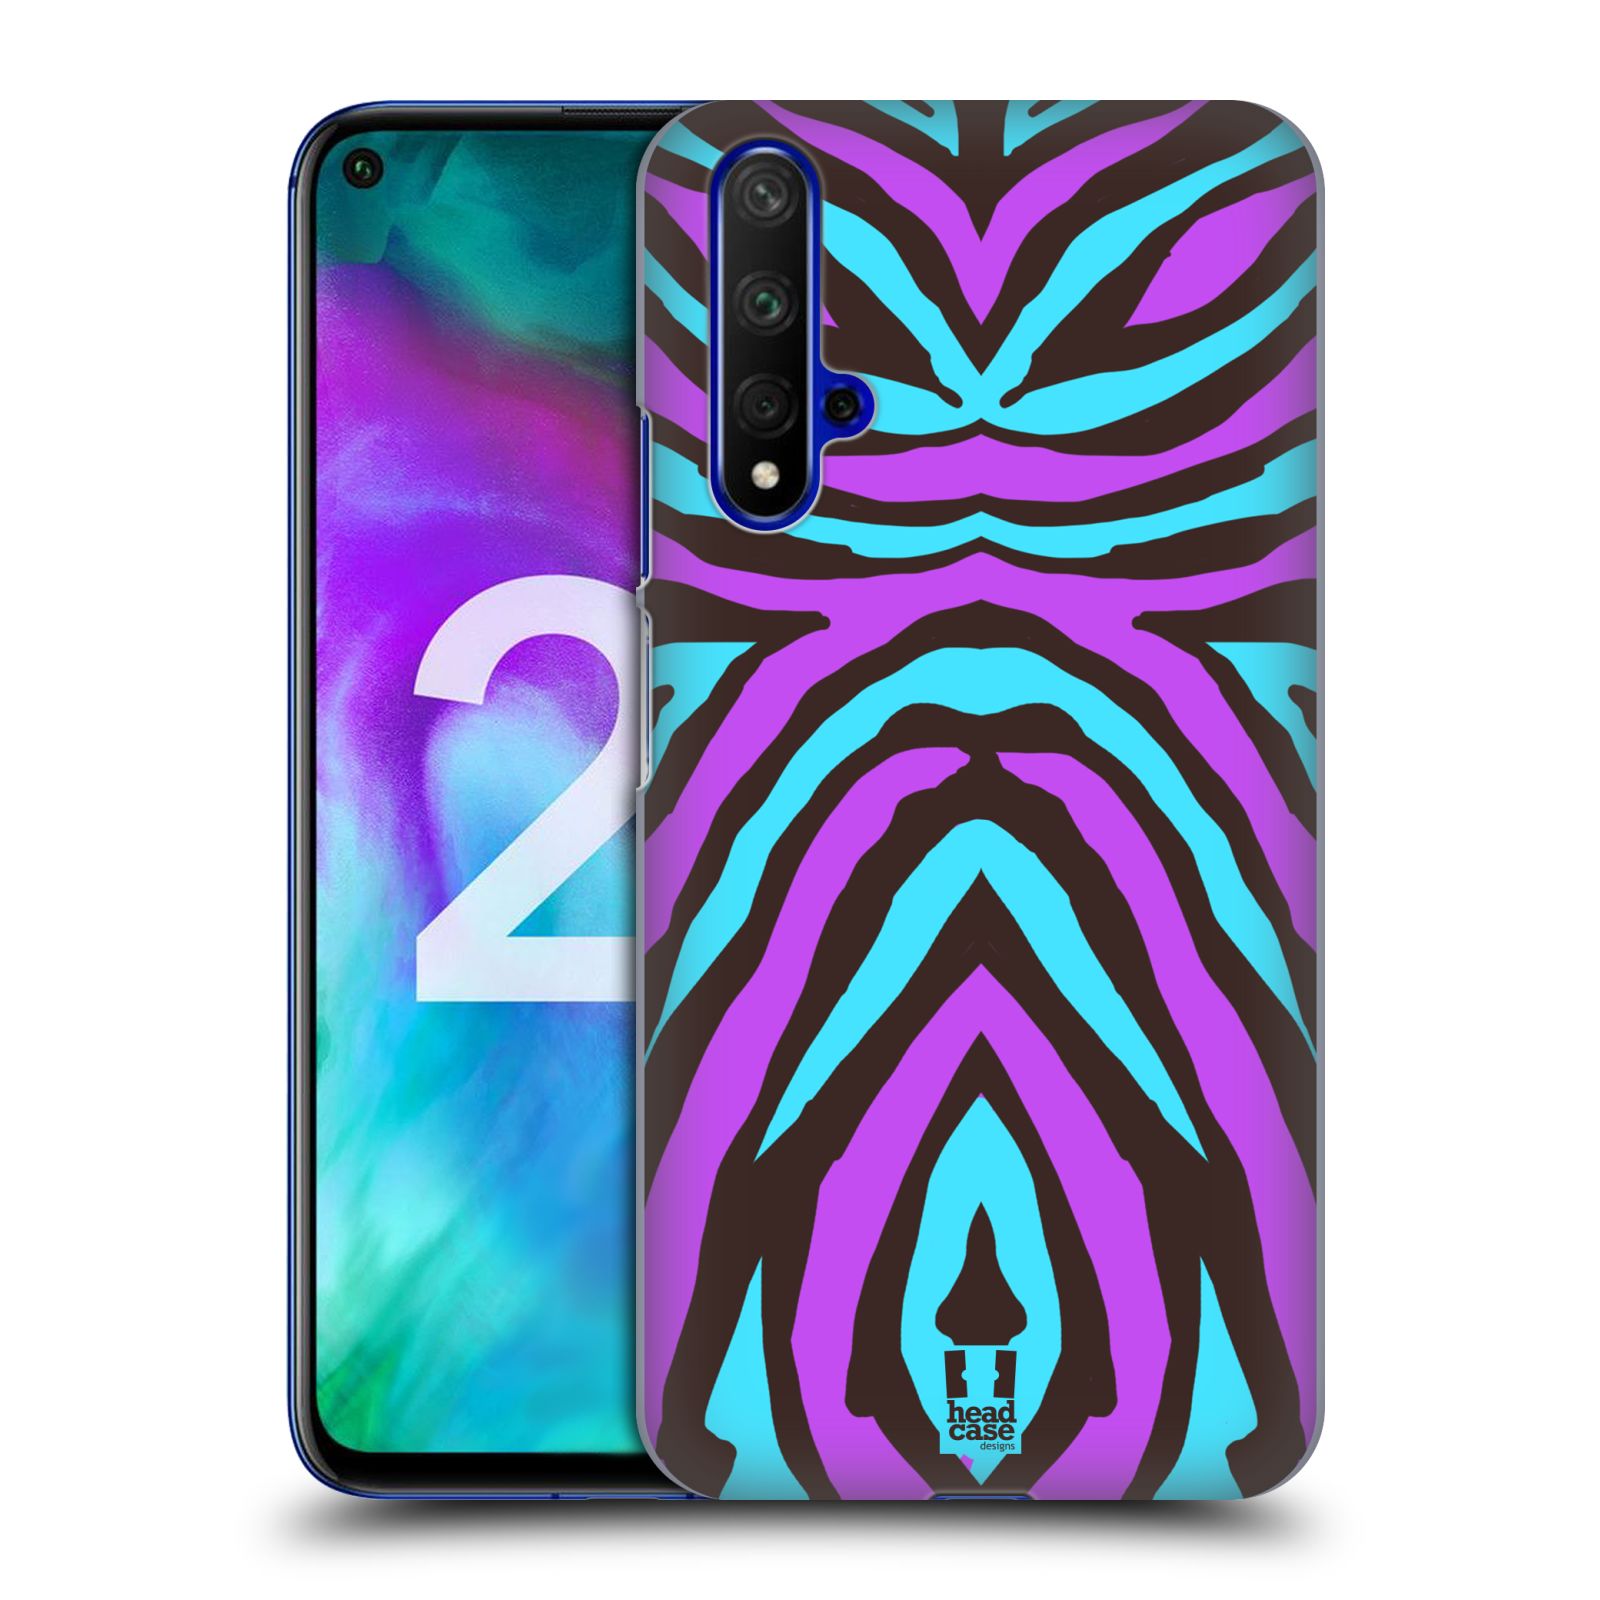 Pouzdro na mobil Honor 20 - HEAD CASE - vzor Divočina zvíře 2 bláznivé pruhy fialová a modrá